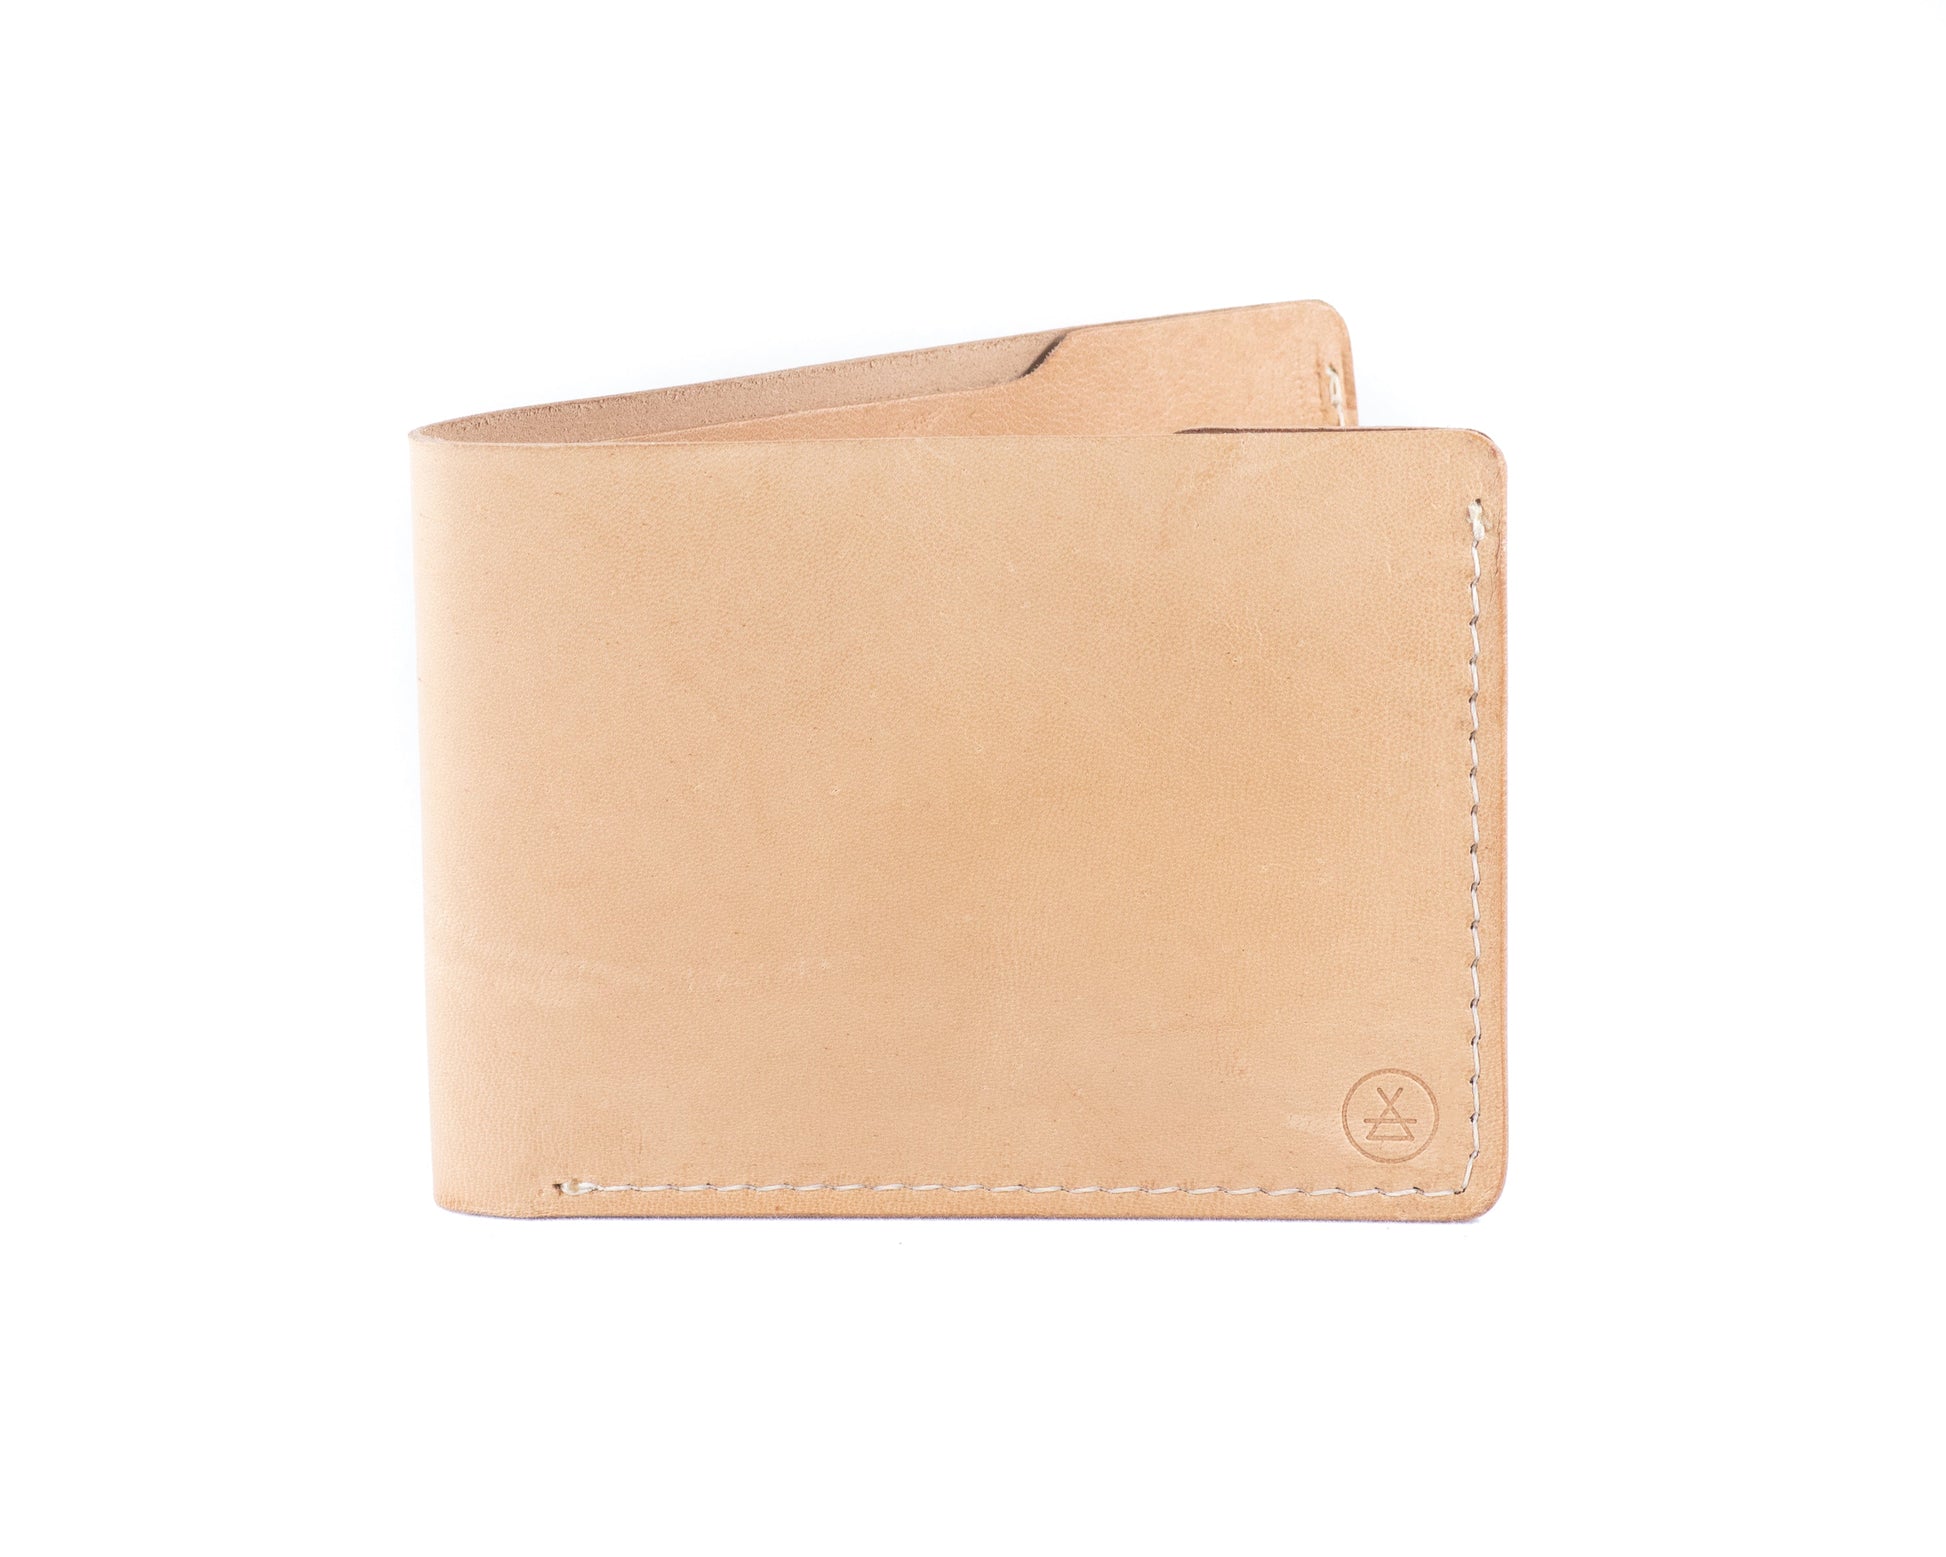 Classic bifold slim wallet in natural Kangaroo leather - Kohutt™ - made in Tasmania